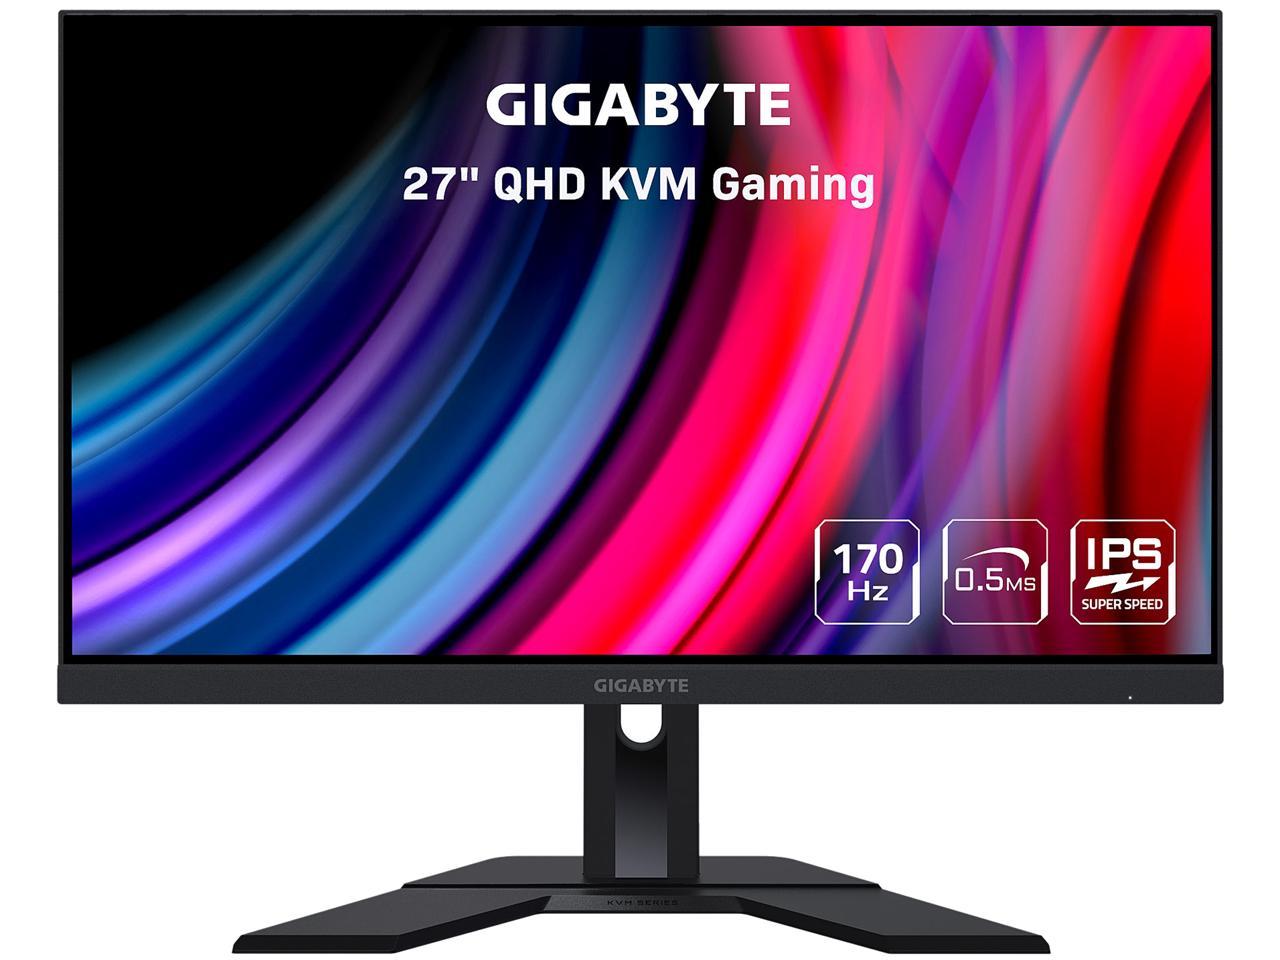 GIGABYTE M27Q 27" 170Hz 1440P KVM Gaming Monitor, 2560 x 1440 SS IPS, 0.5ms (MPRT), 92% DCI P3, HDR Ready, FreeSync Premium, 1x Display Port 1.2, 2x HDMI 2.0, 2x USB 3.0, 1x USB Type-C